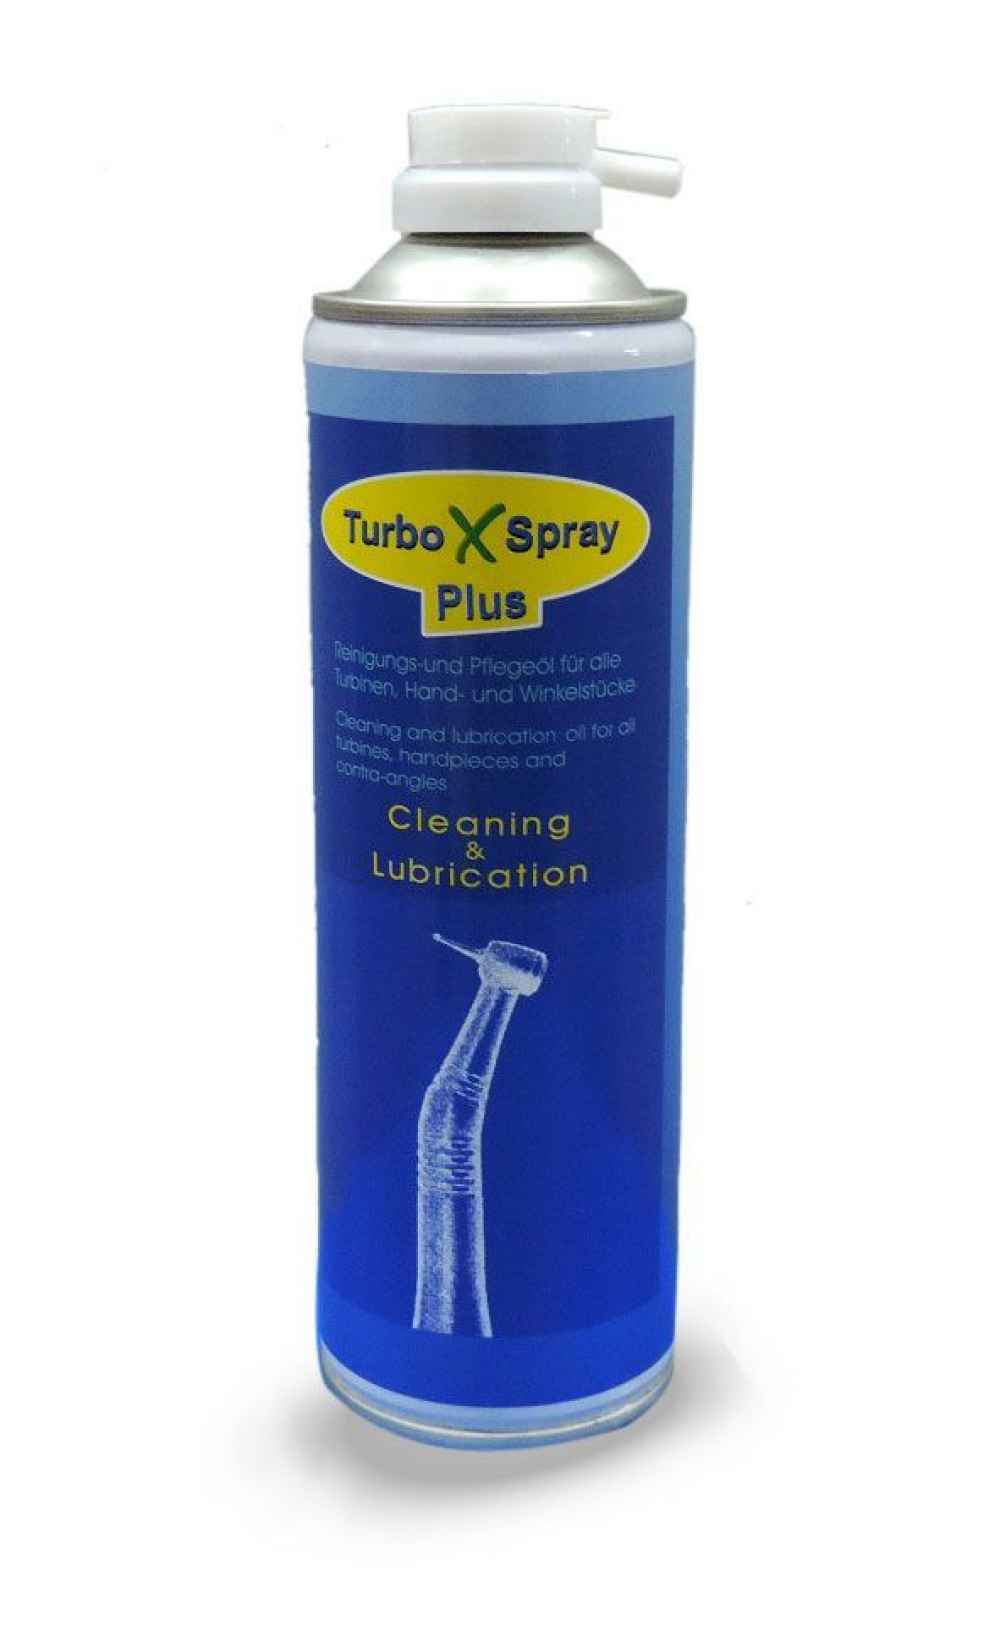 NSK Turbo X Spray Plus / Dental Cleaning & Lubrication Spray